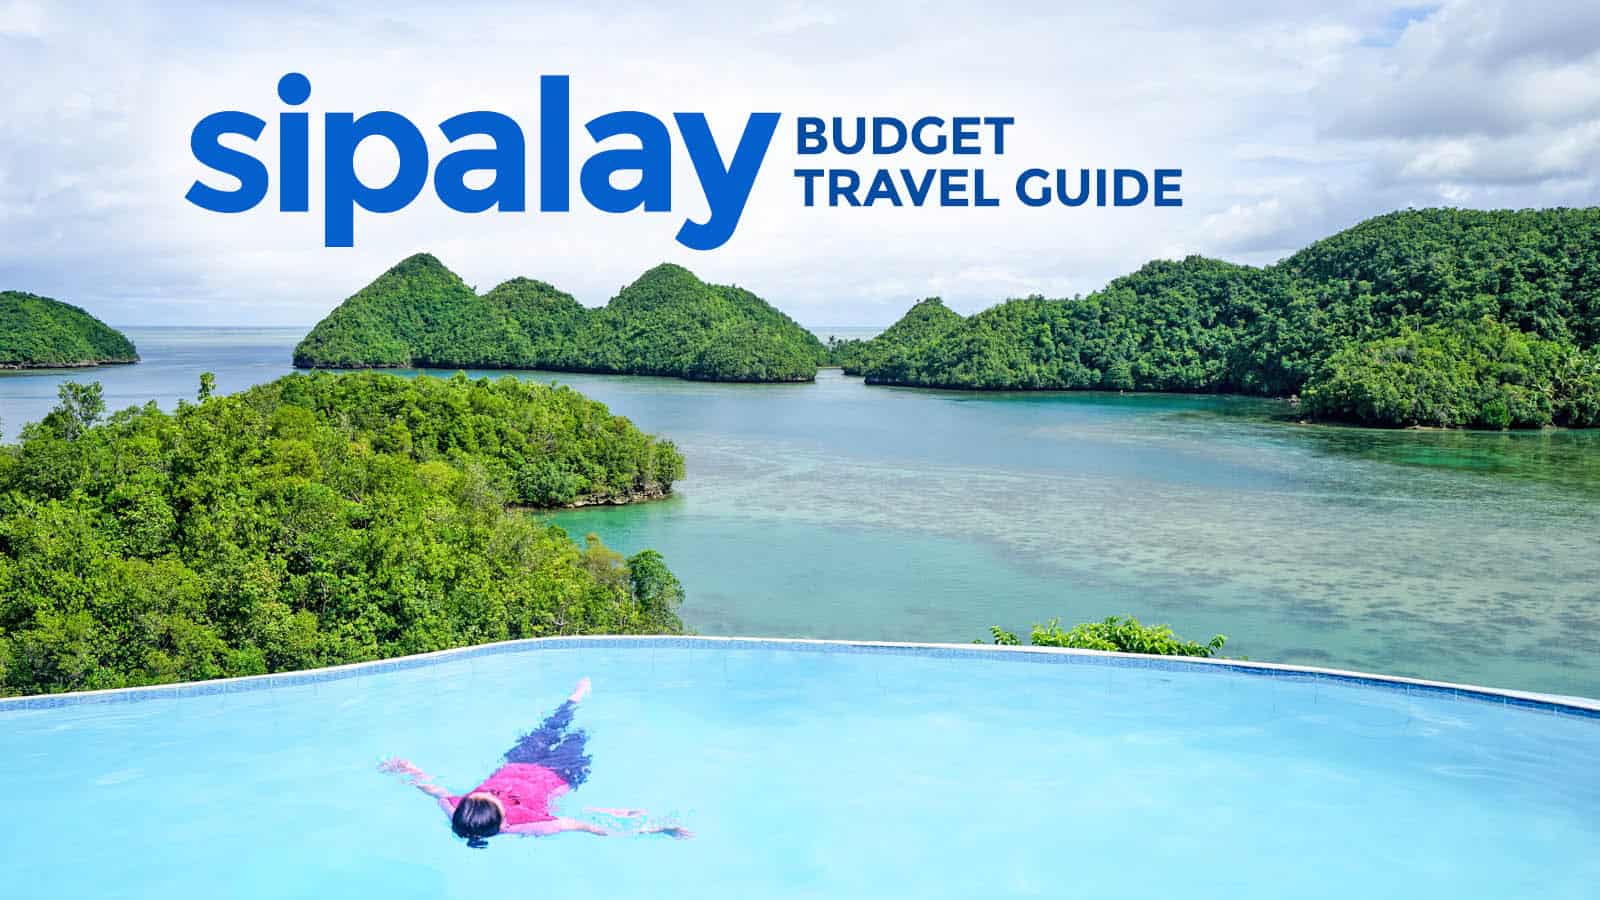 SIPALAY旅游指南与预算行程